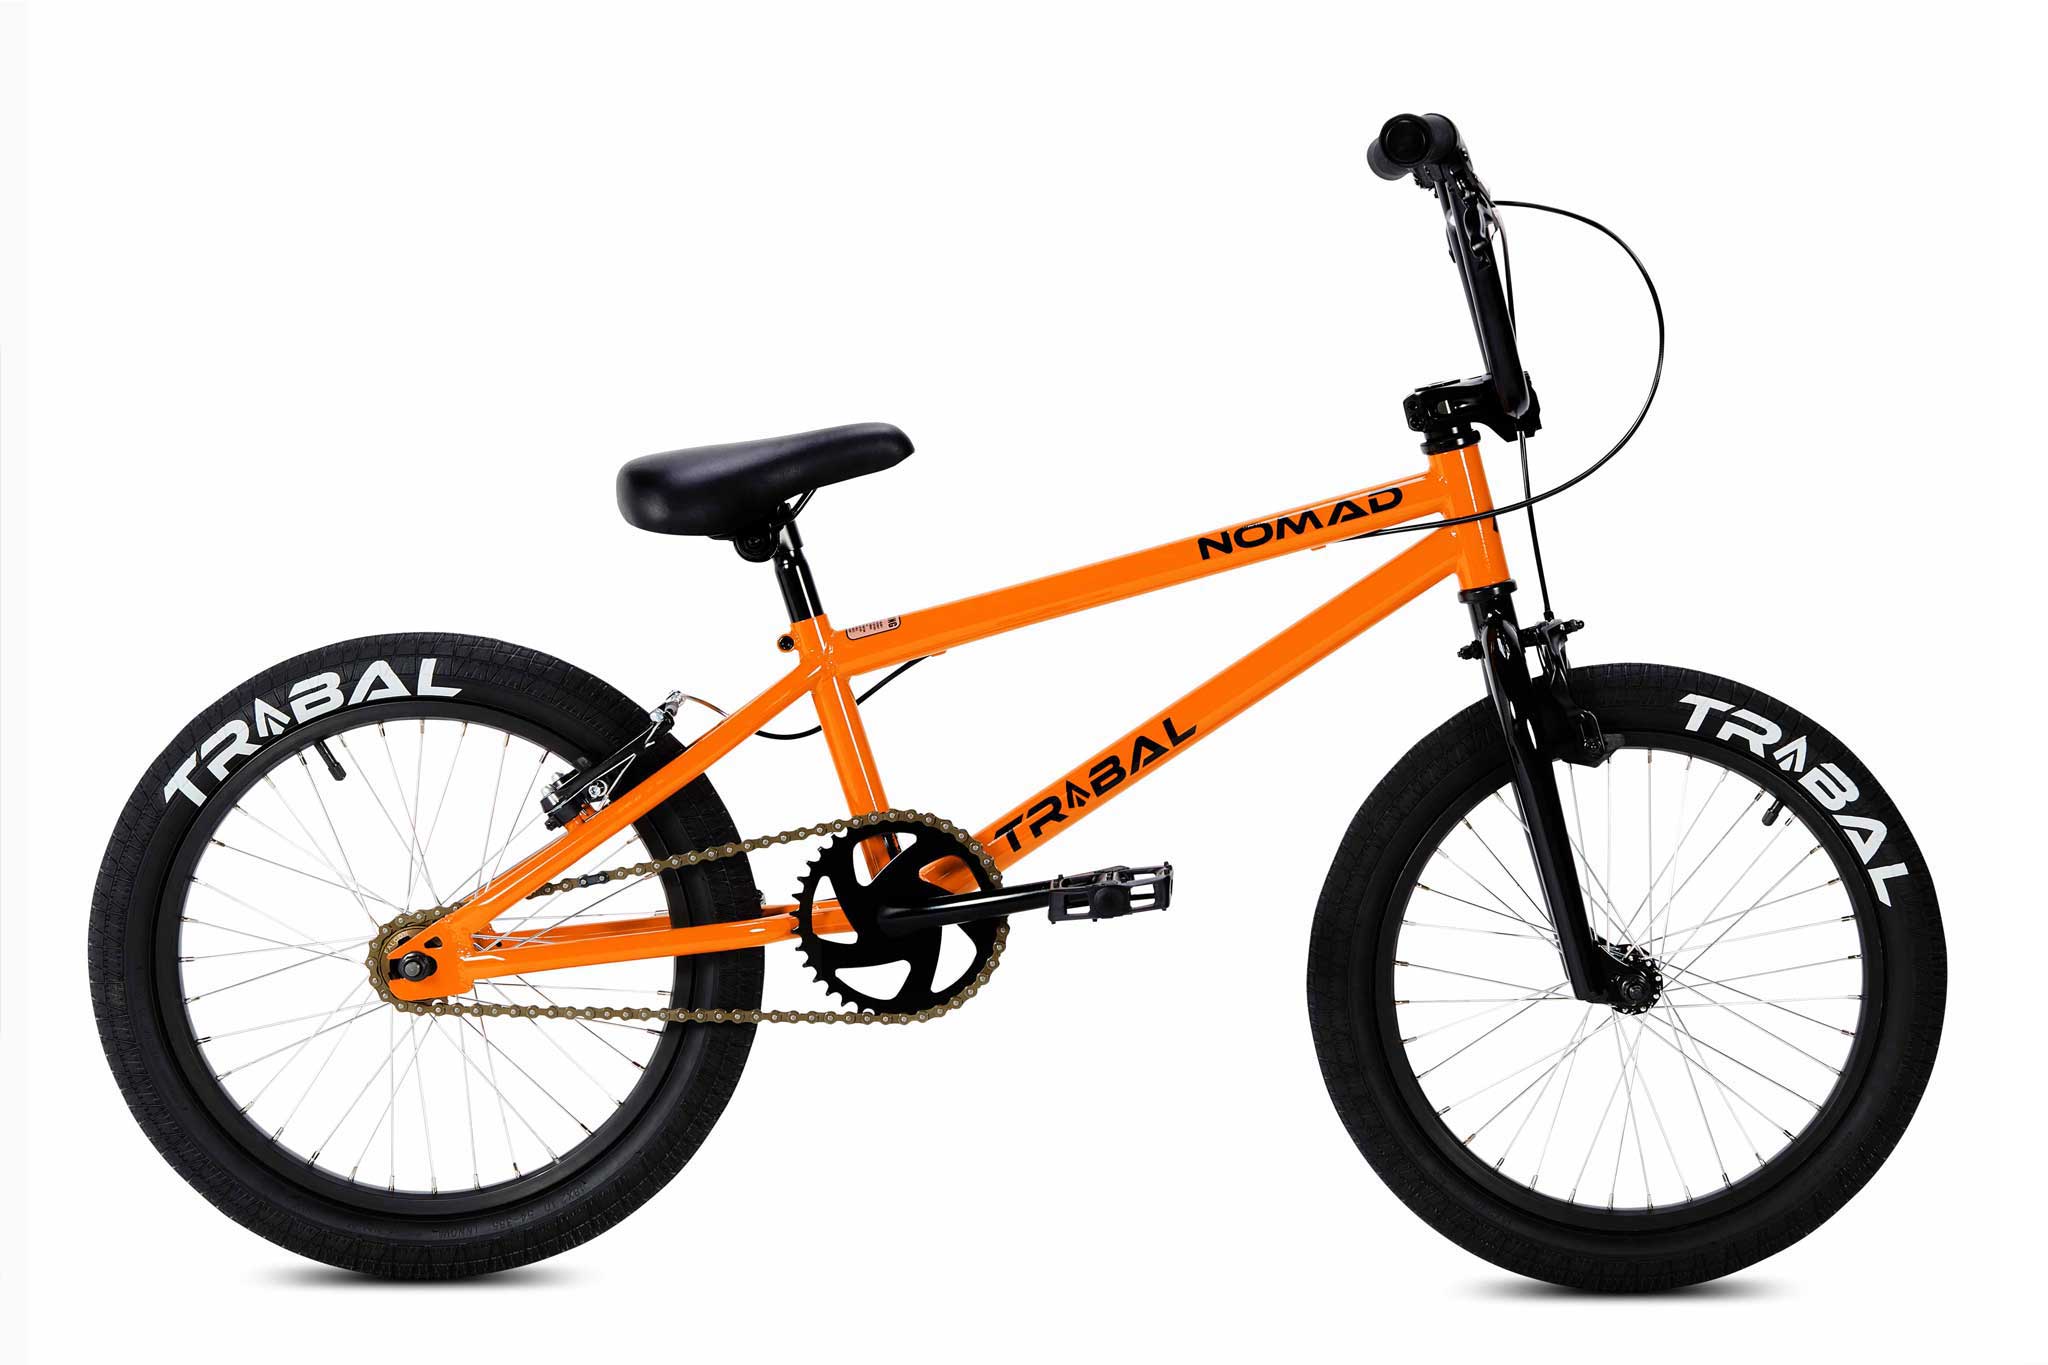 Tribal Nomad 18" BMX Bike - Orange